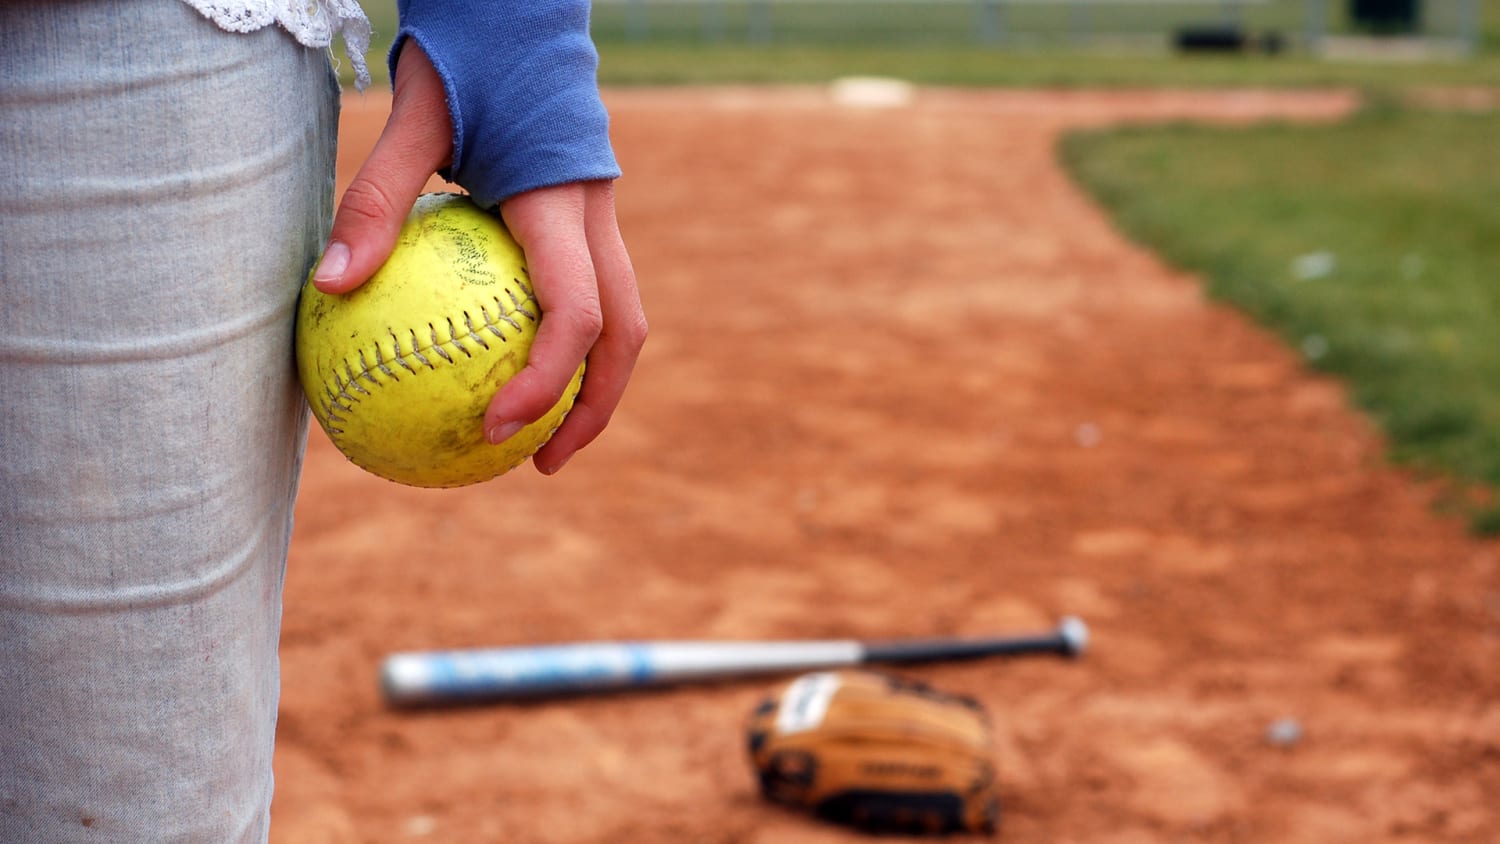 Snapchat post ends World Series bid for girls' softball team - TODAY.com